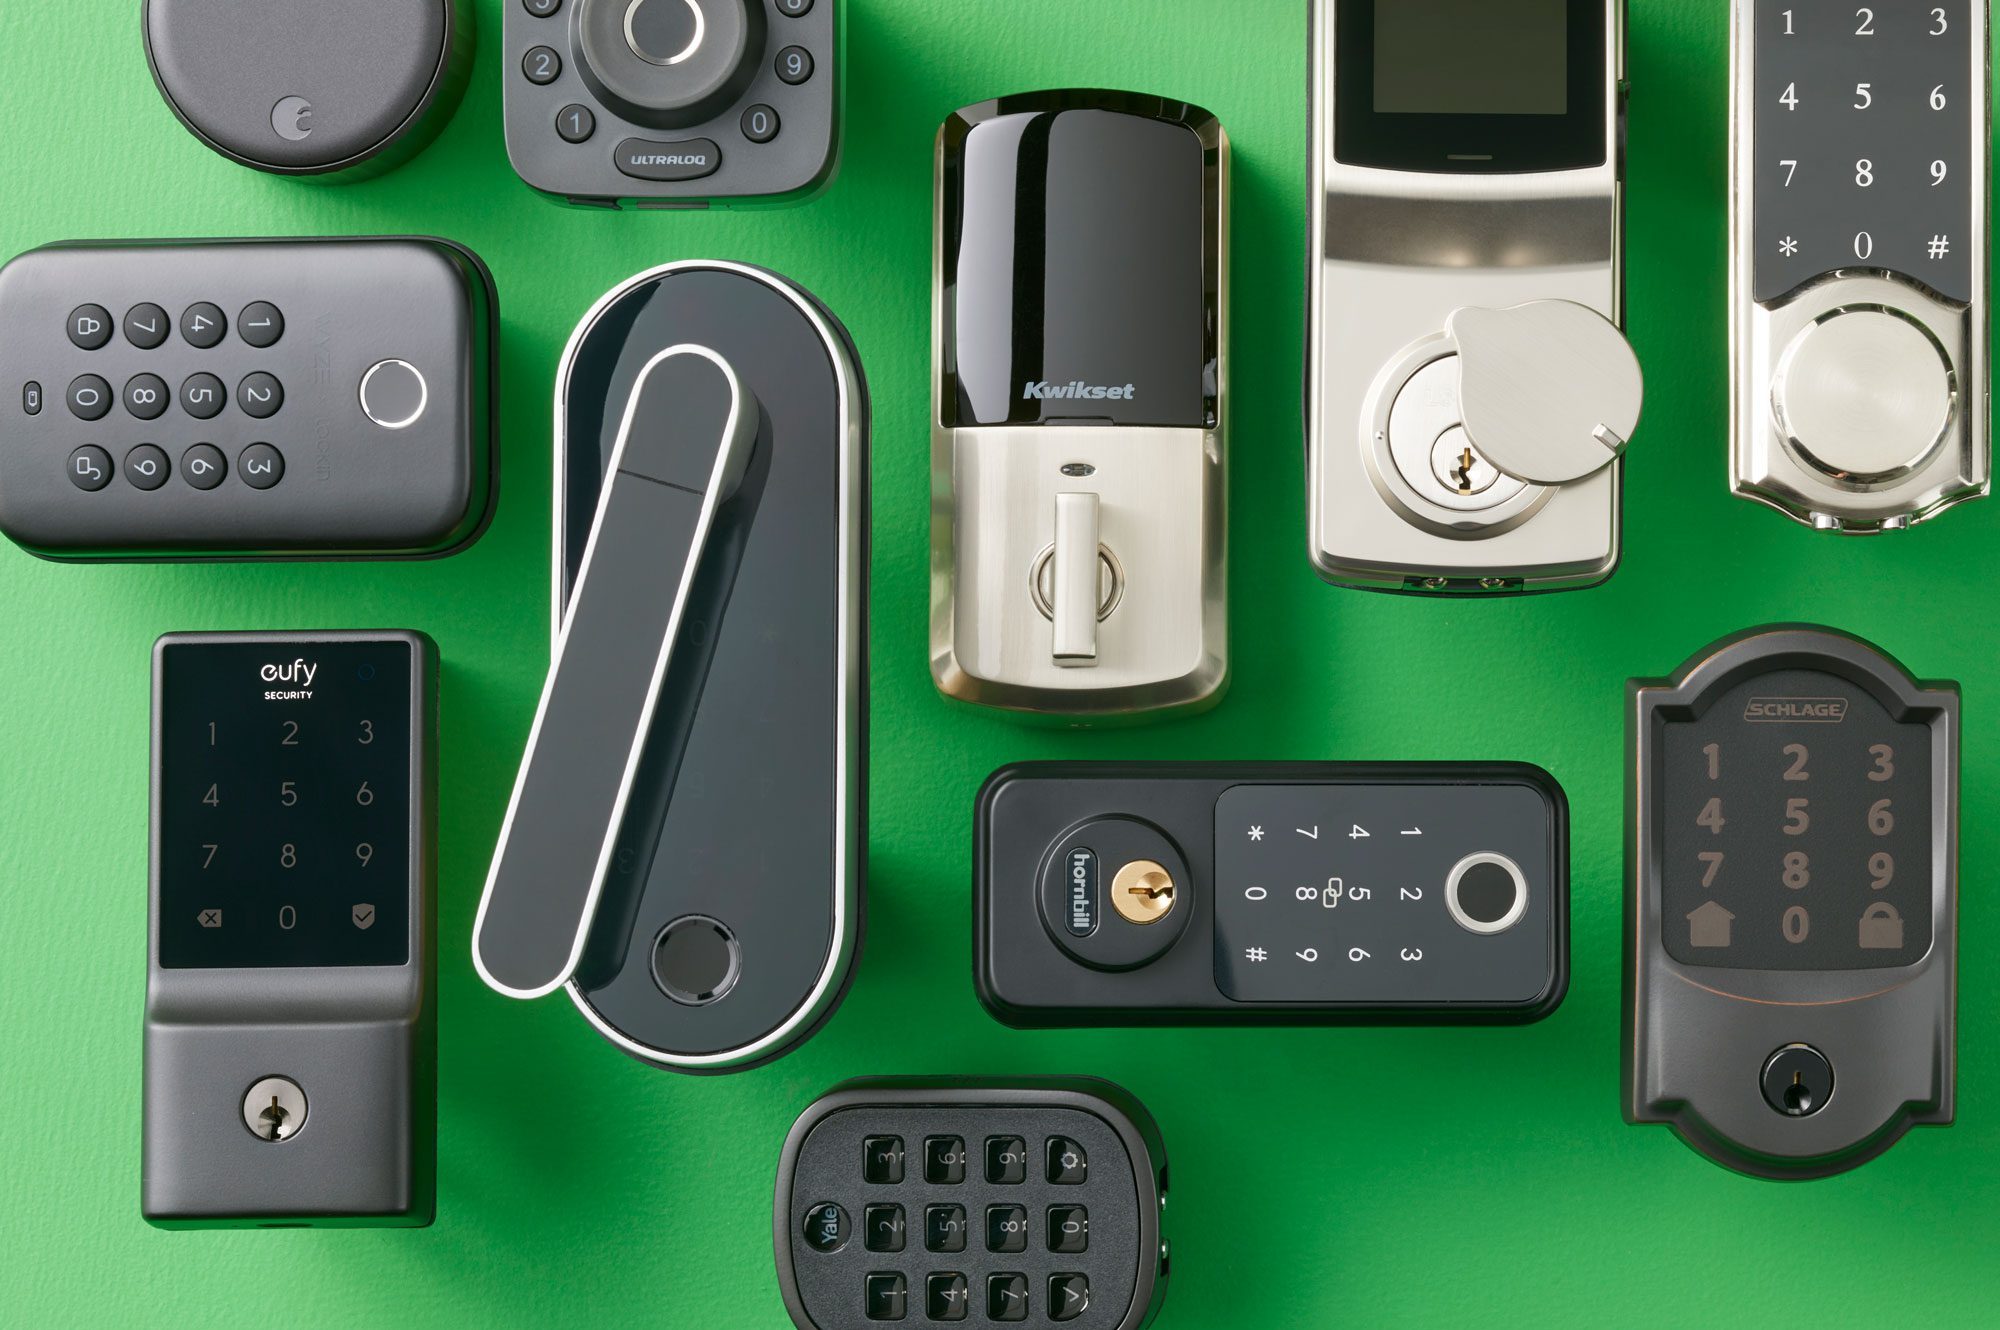 Best Smart Locks For Airbnb